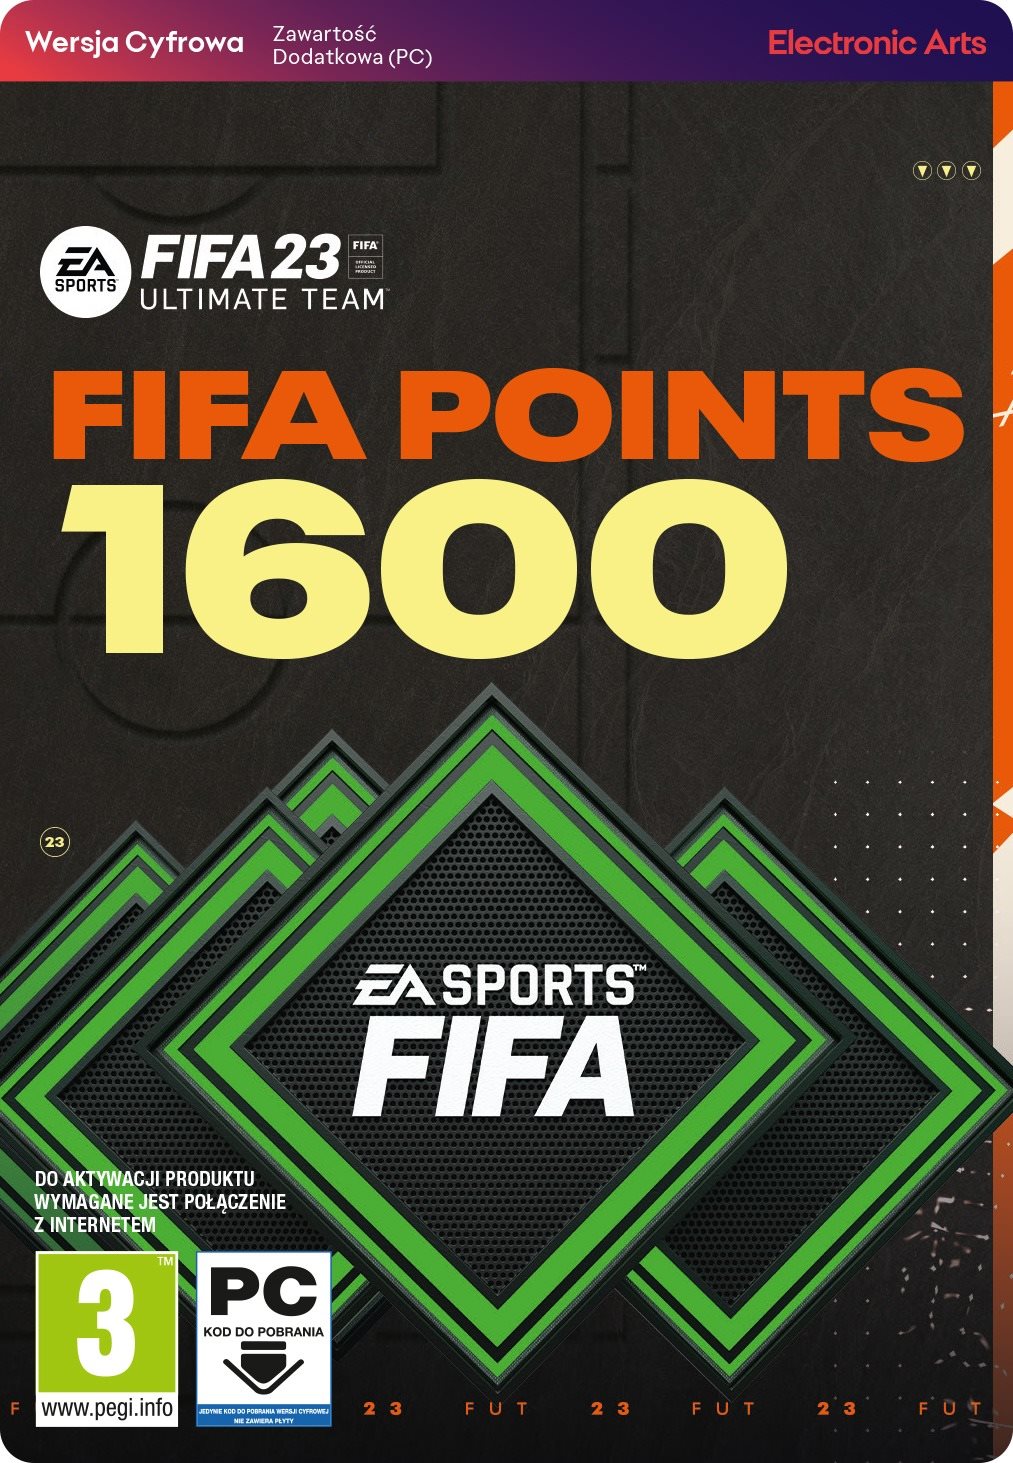 Videójáték kiegészítő FIFA 23 ULTIMATE TEAM 1600 POINTS - PC DIGITAL